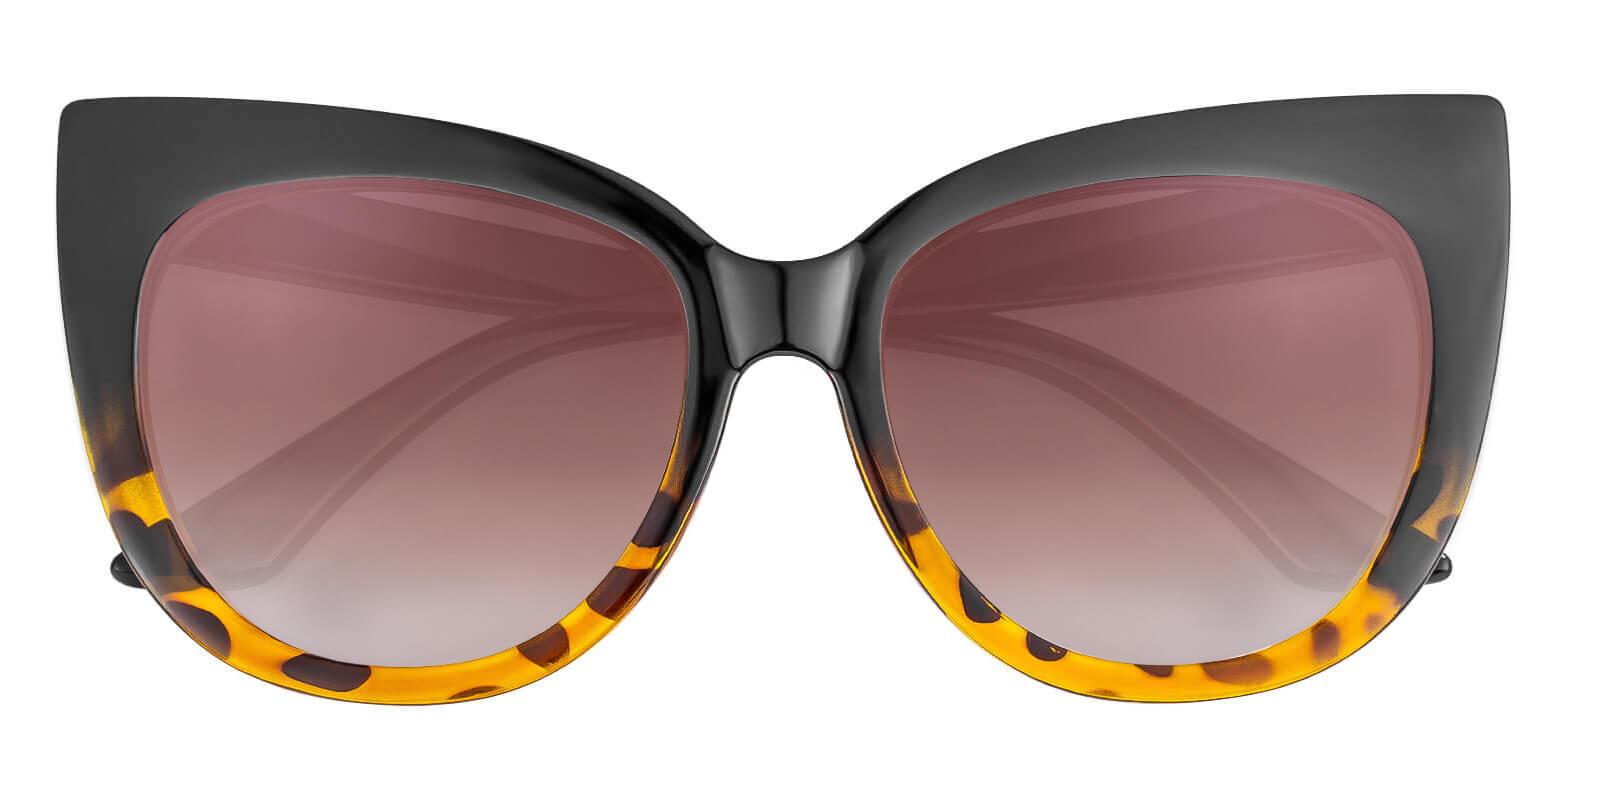 Hideout Tortoise Plastic Fashion , Sunglasses Frames from ABBE Glasses